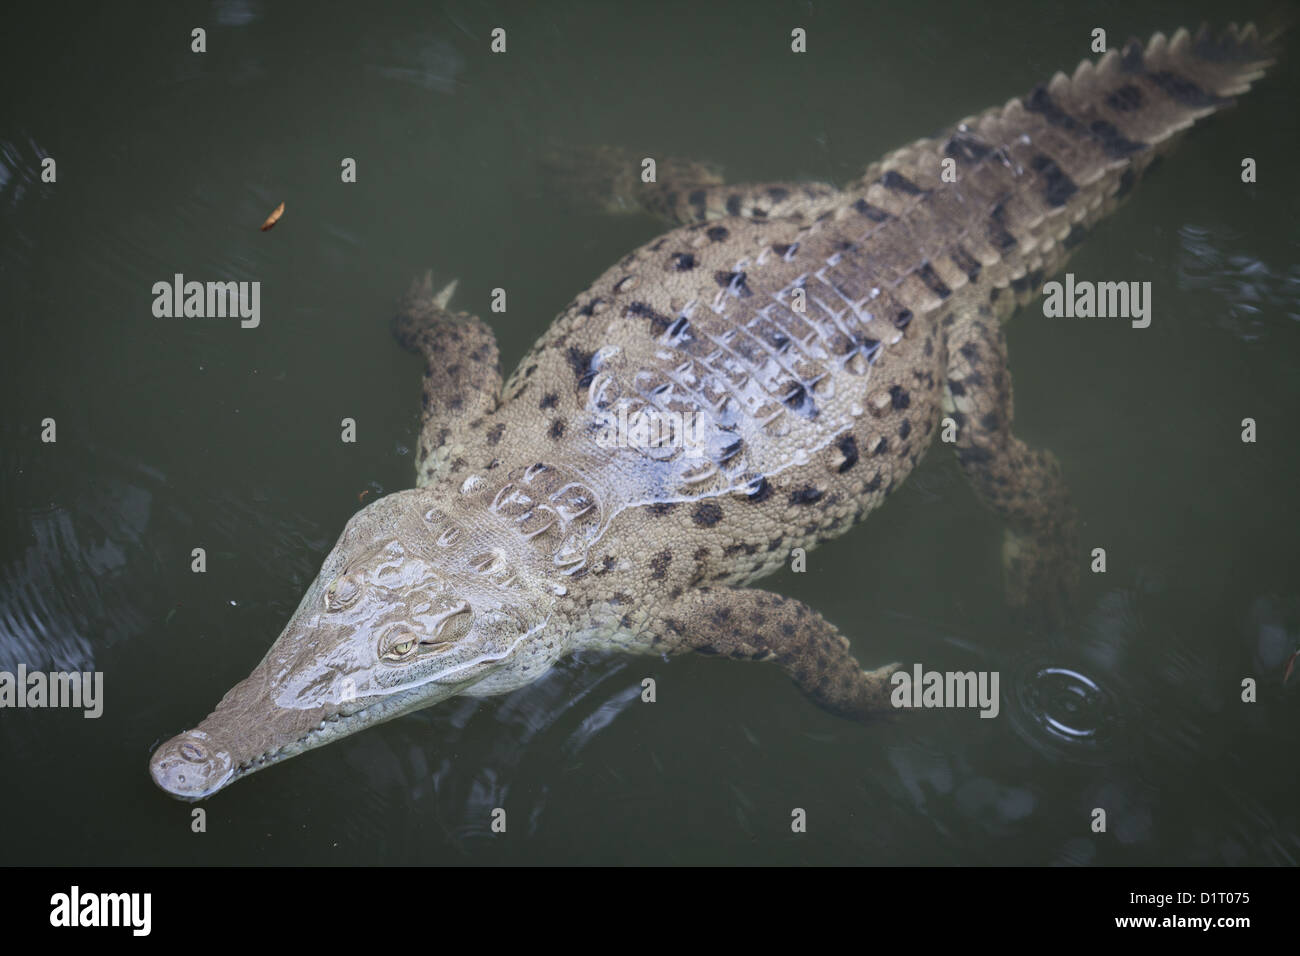 Amerikanische Krokodil, Crocodylus acutus, in einem Fluss in der Nähe von Tonosi, Los Santos Province, Republik Panama. Stockfoto